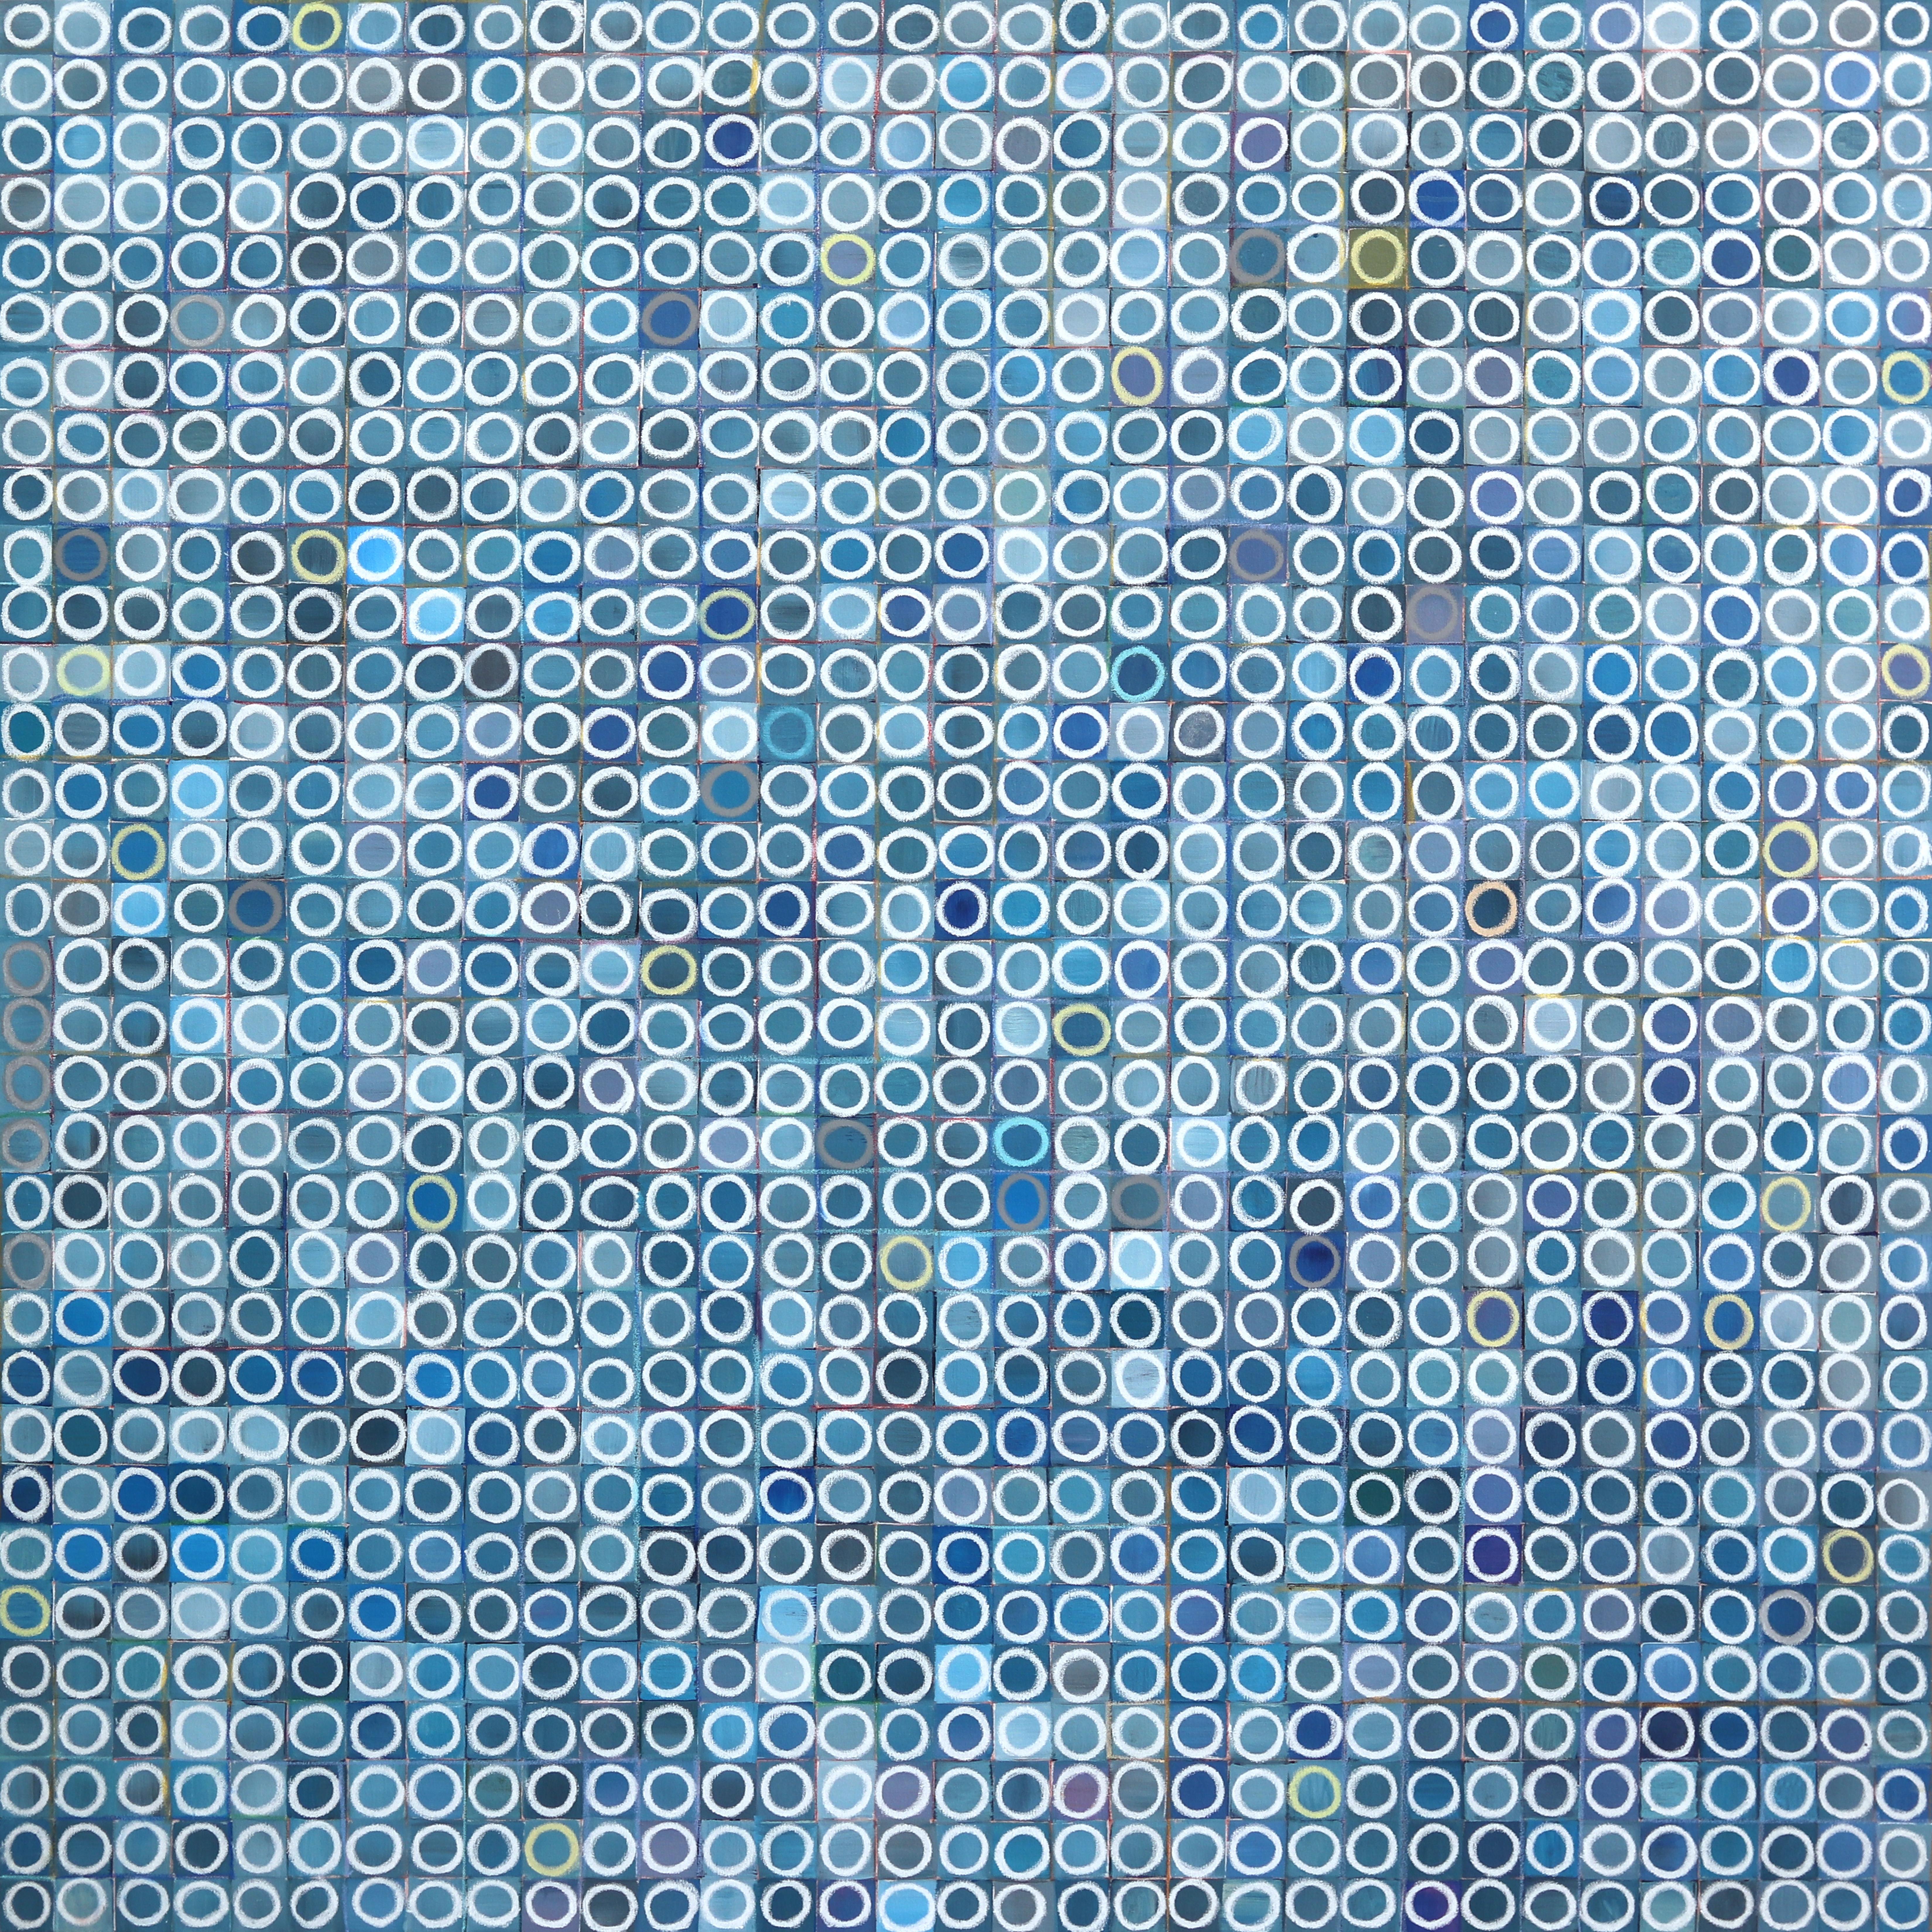 1089 Circles - Large Blue Abstract Geometric Original Painting